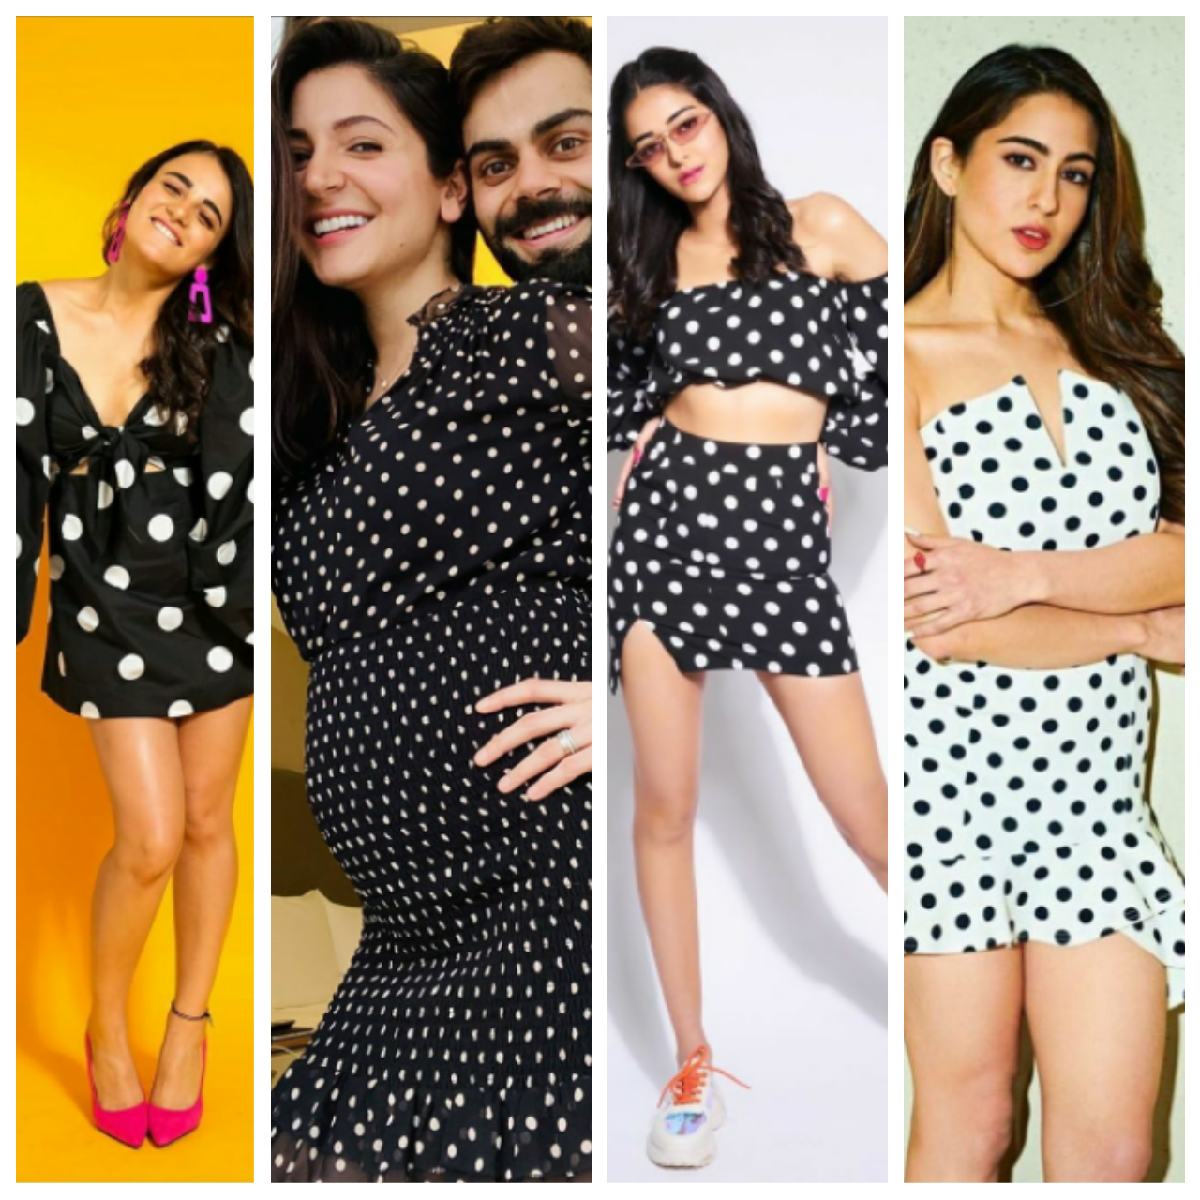 Buy Premium Polka Dot Frill Dress Online | SizeYOU by Jaey